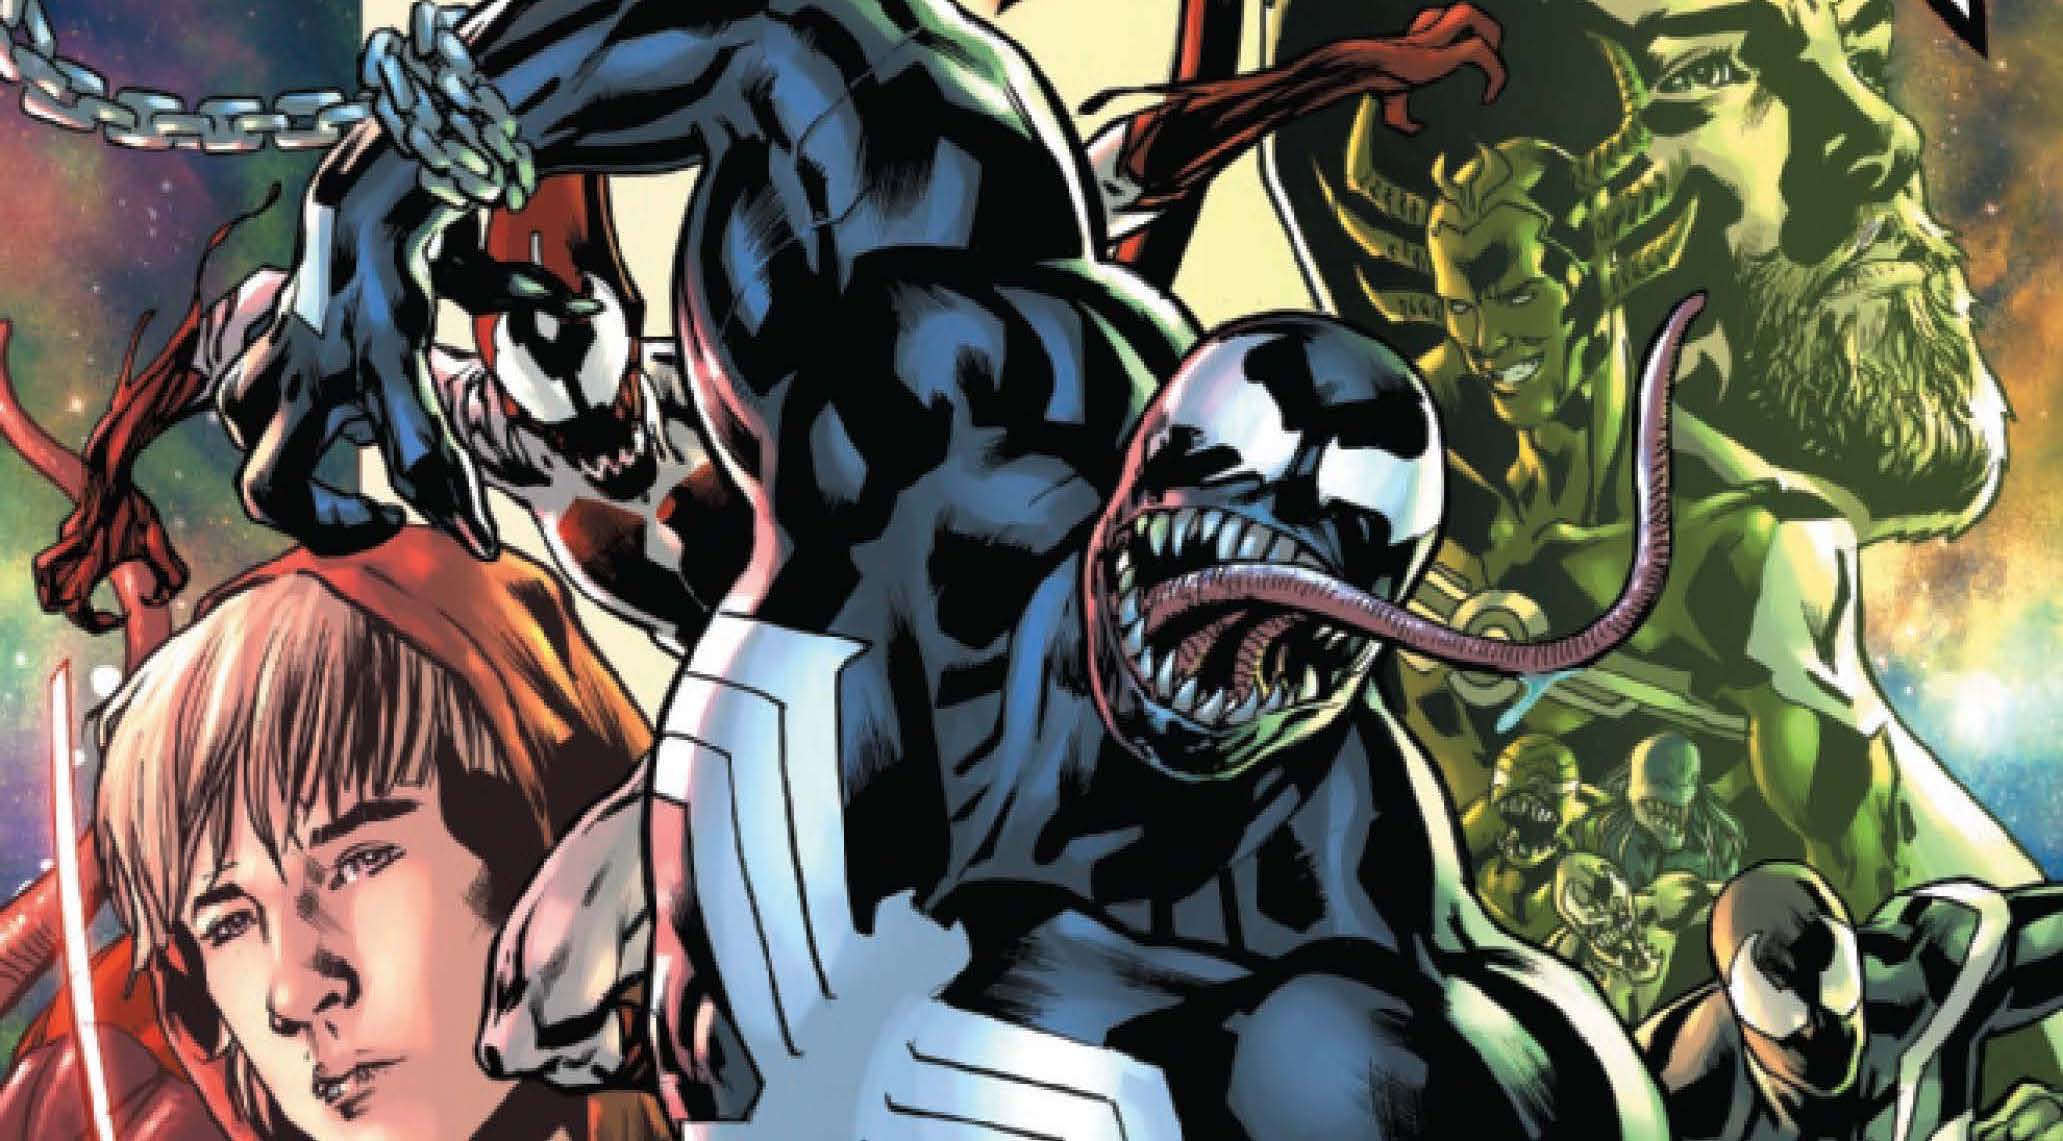 EXCLUSIVE Marvel Preview: Venom #18